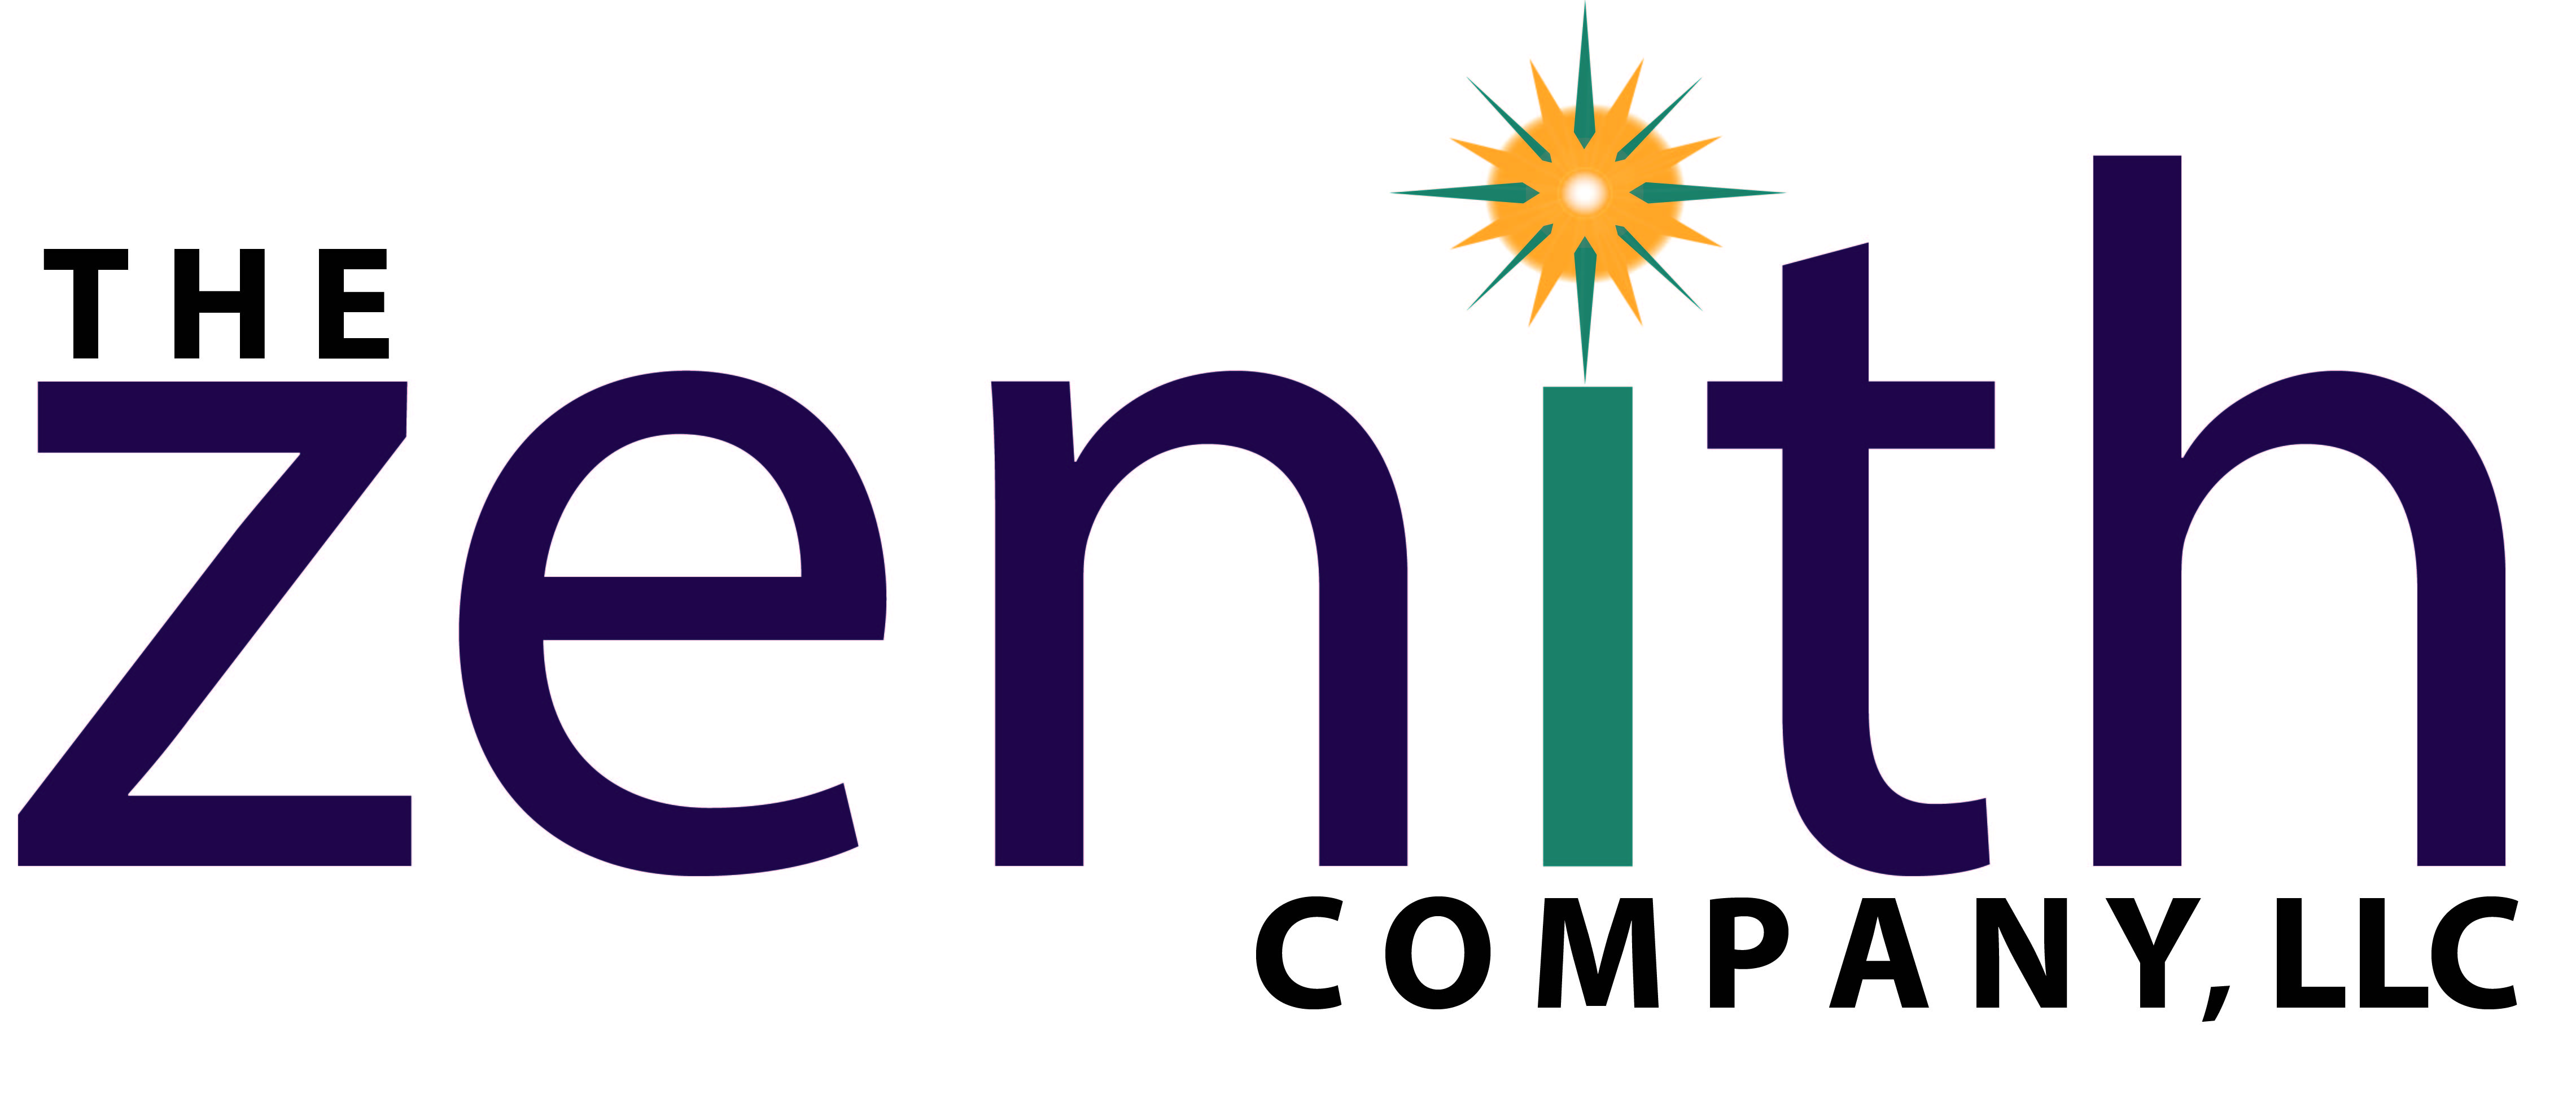 Zenith logo final (1).jpg